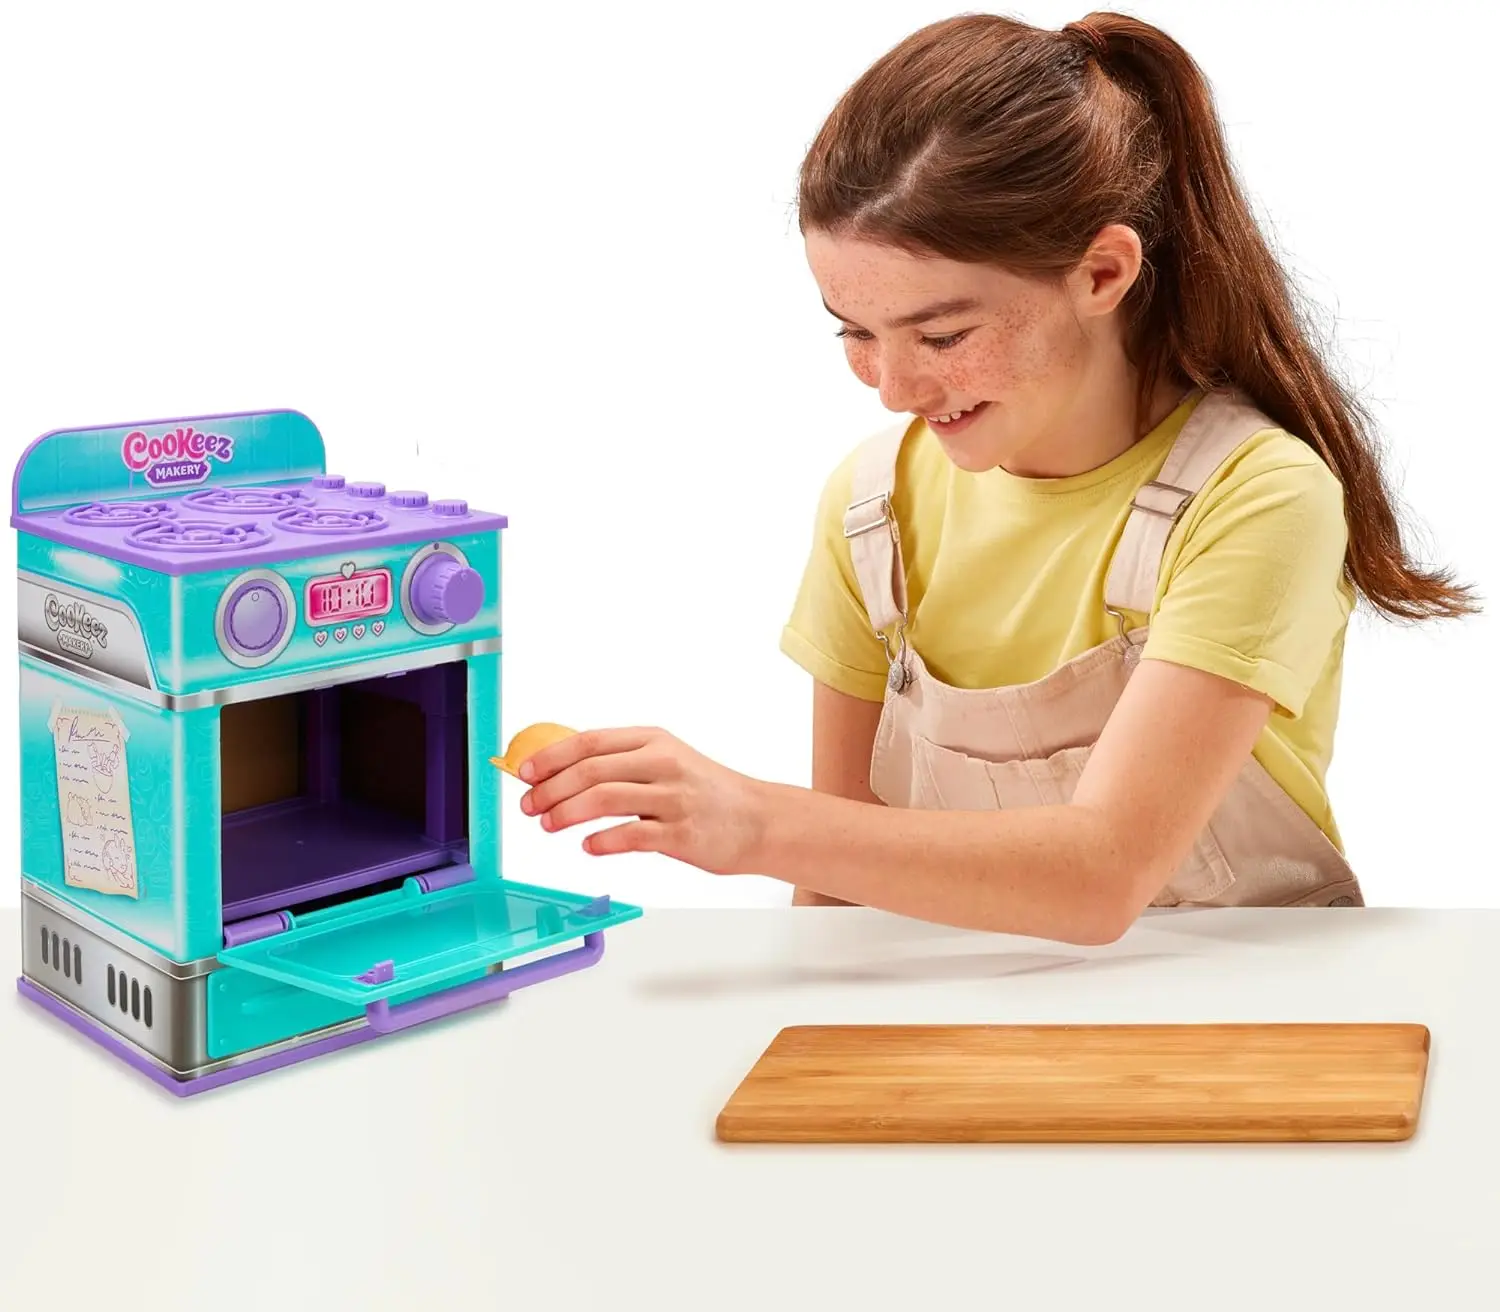 https://ae01.alicdn.com/kf/S3cb143bfac584a96aa7665072fcd5f44F/Original-Cookeez-Makery-Cinnamon-Treatz-Oven-Surprise-Interactive-Plush-Toy-Mix-Make-A-Surprise-Bake-Children.jpg